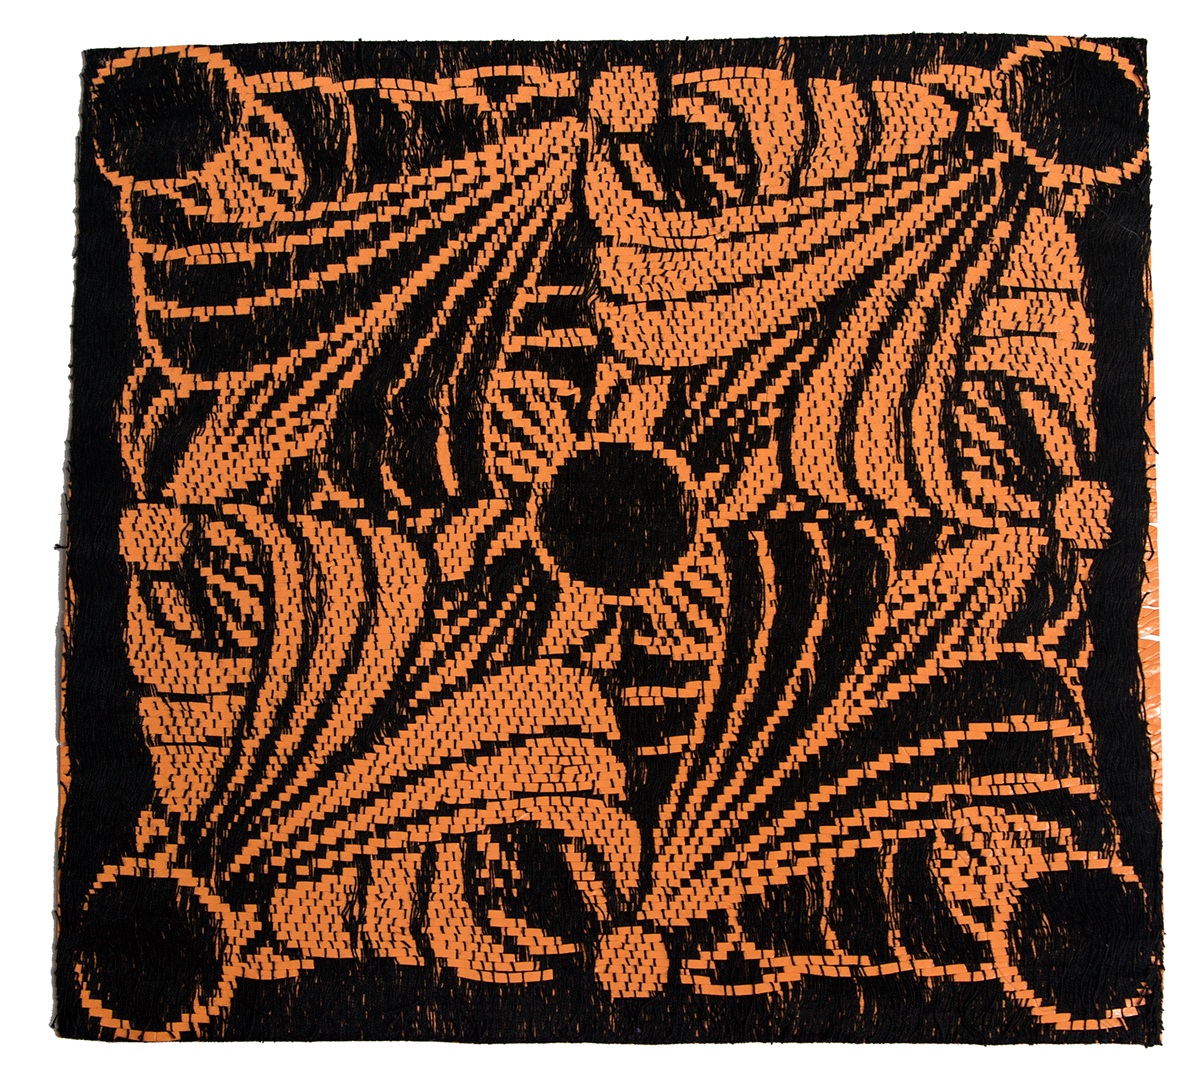 Textiles jacquard jacquard weaving weaving Melt Synthetic material expriment experimental jacquard experimental weaving material studies